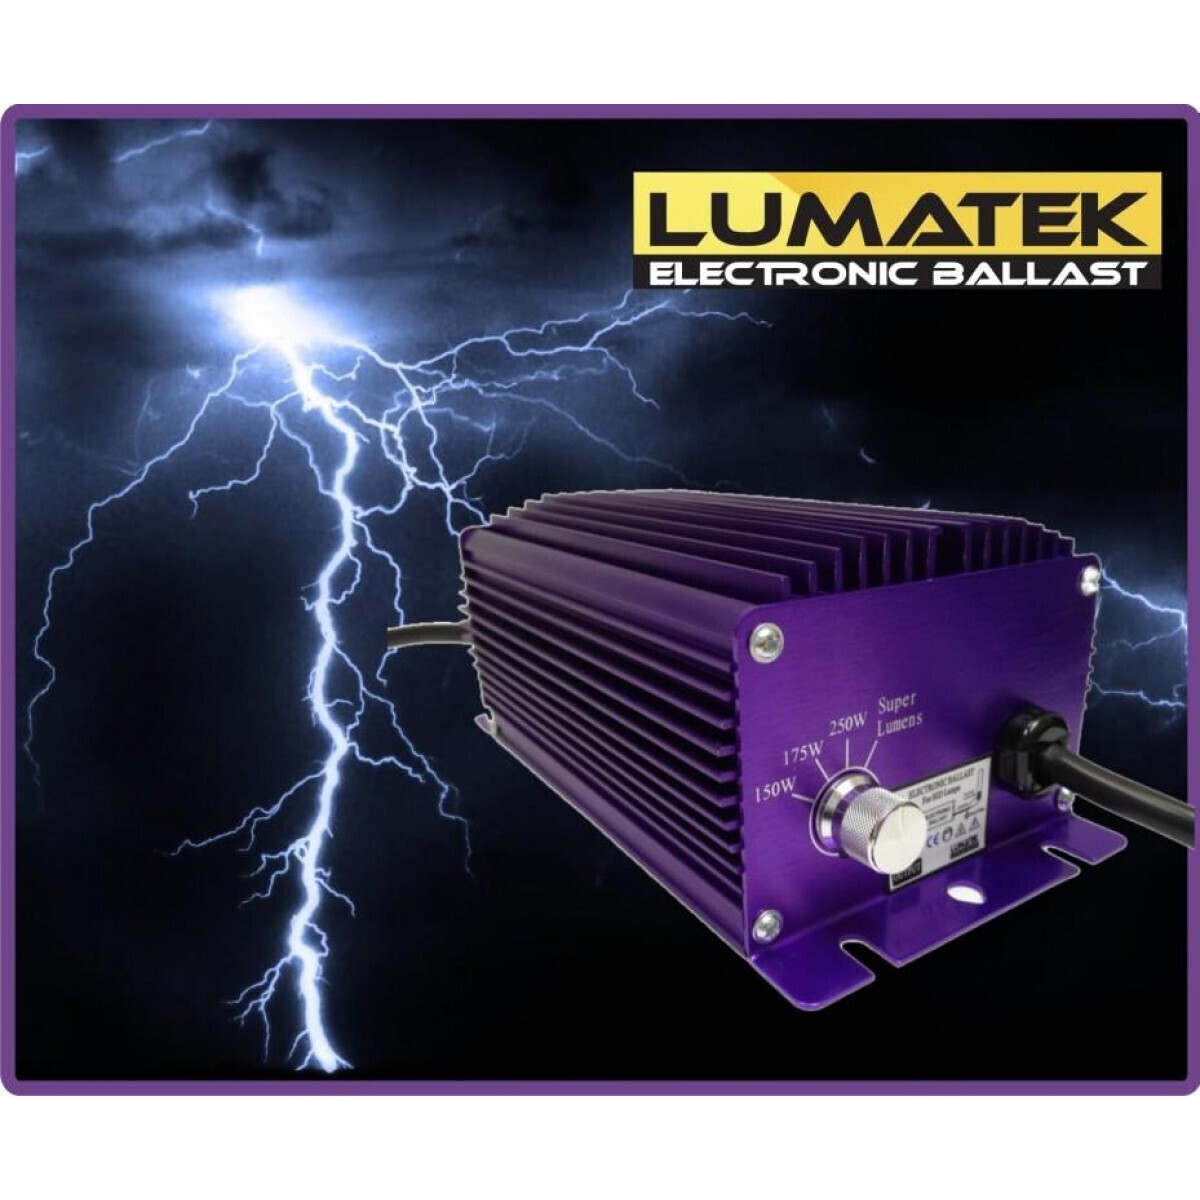 Ballast elettronico Lumatek 250w hps-mh quadripotenza Super lumen